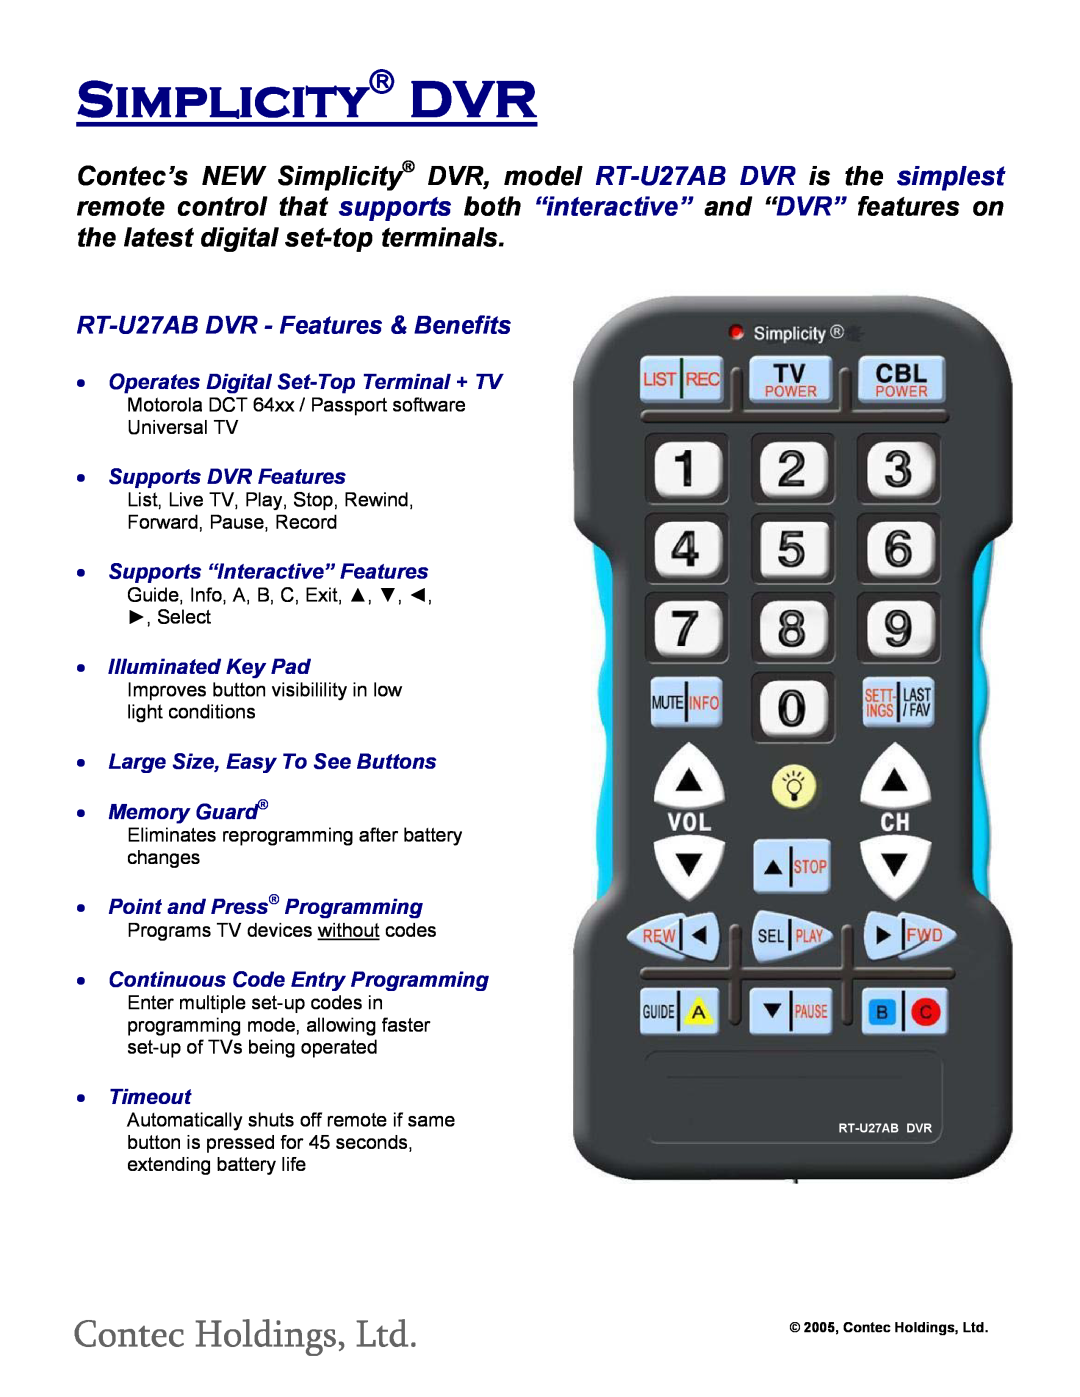 Motorola manual Simplicity→ DVR, RT-U27AB DVR - Features & Benefits, Operates Digital Set-Top Terminal + TV, Timeout 